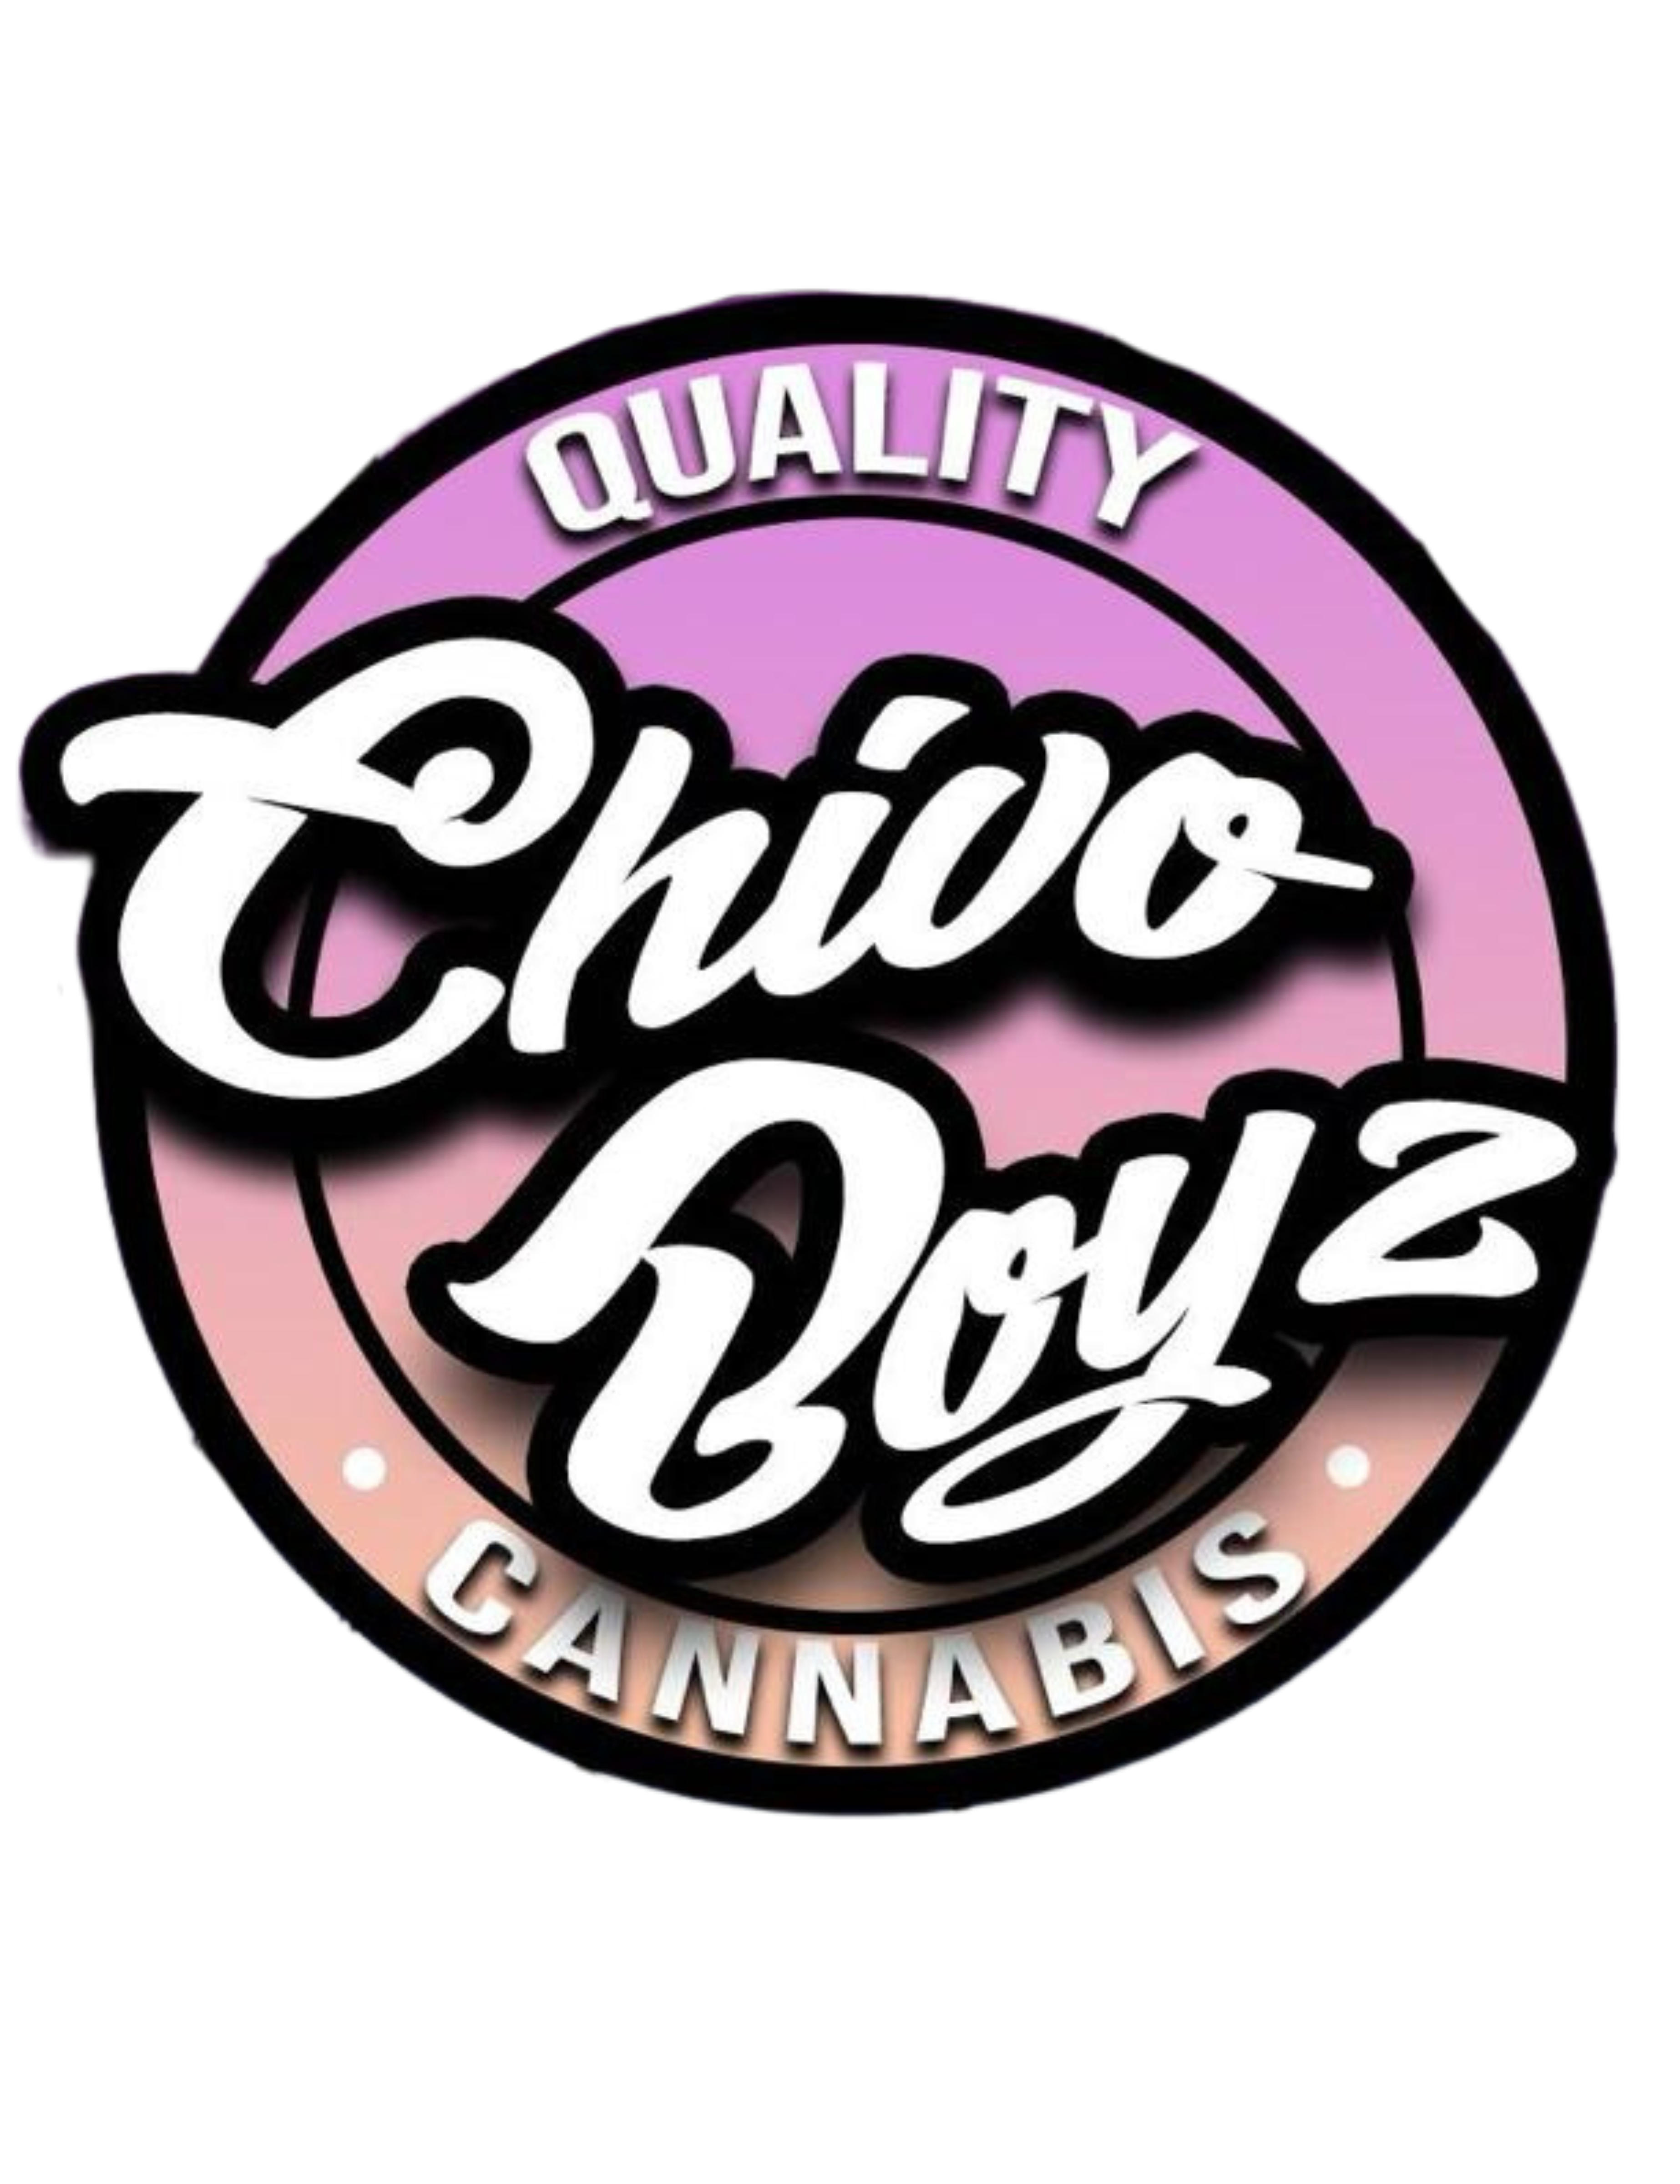 Chivo Boyz Cannabis